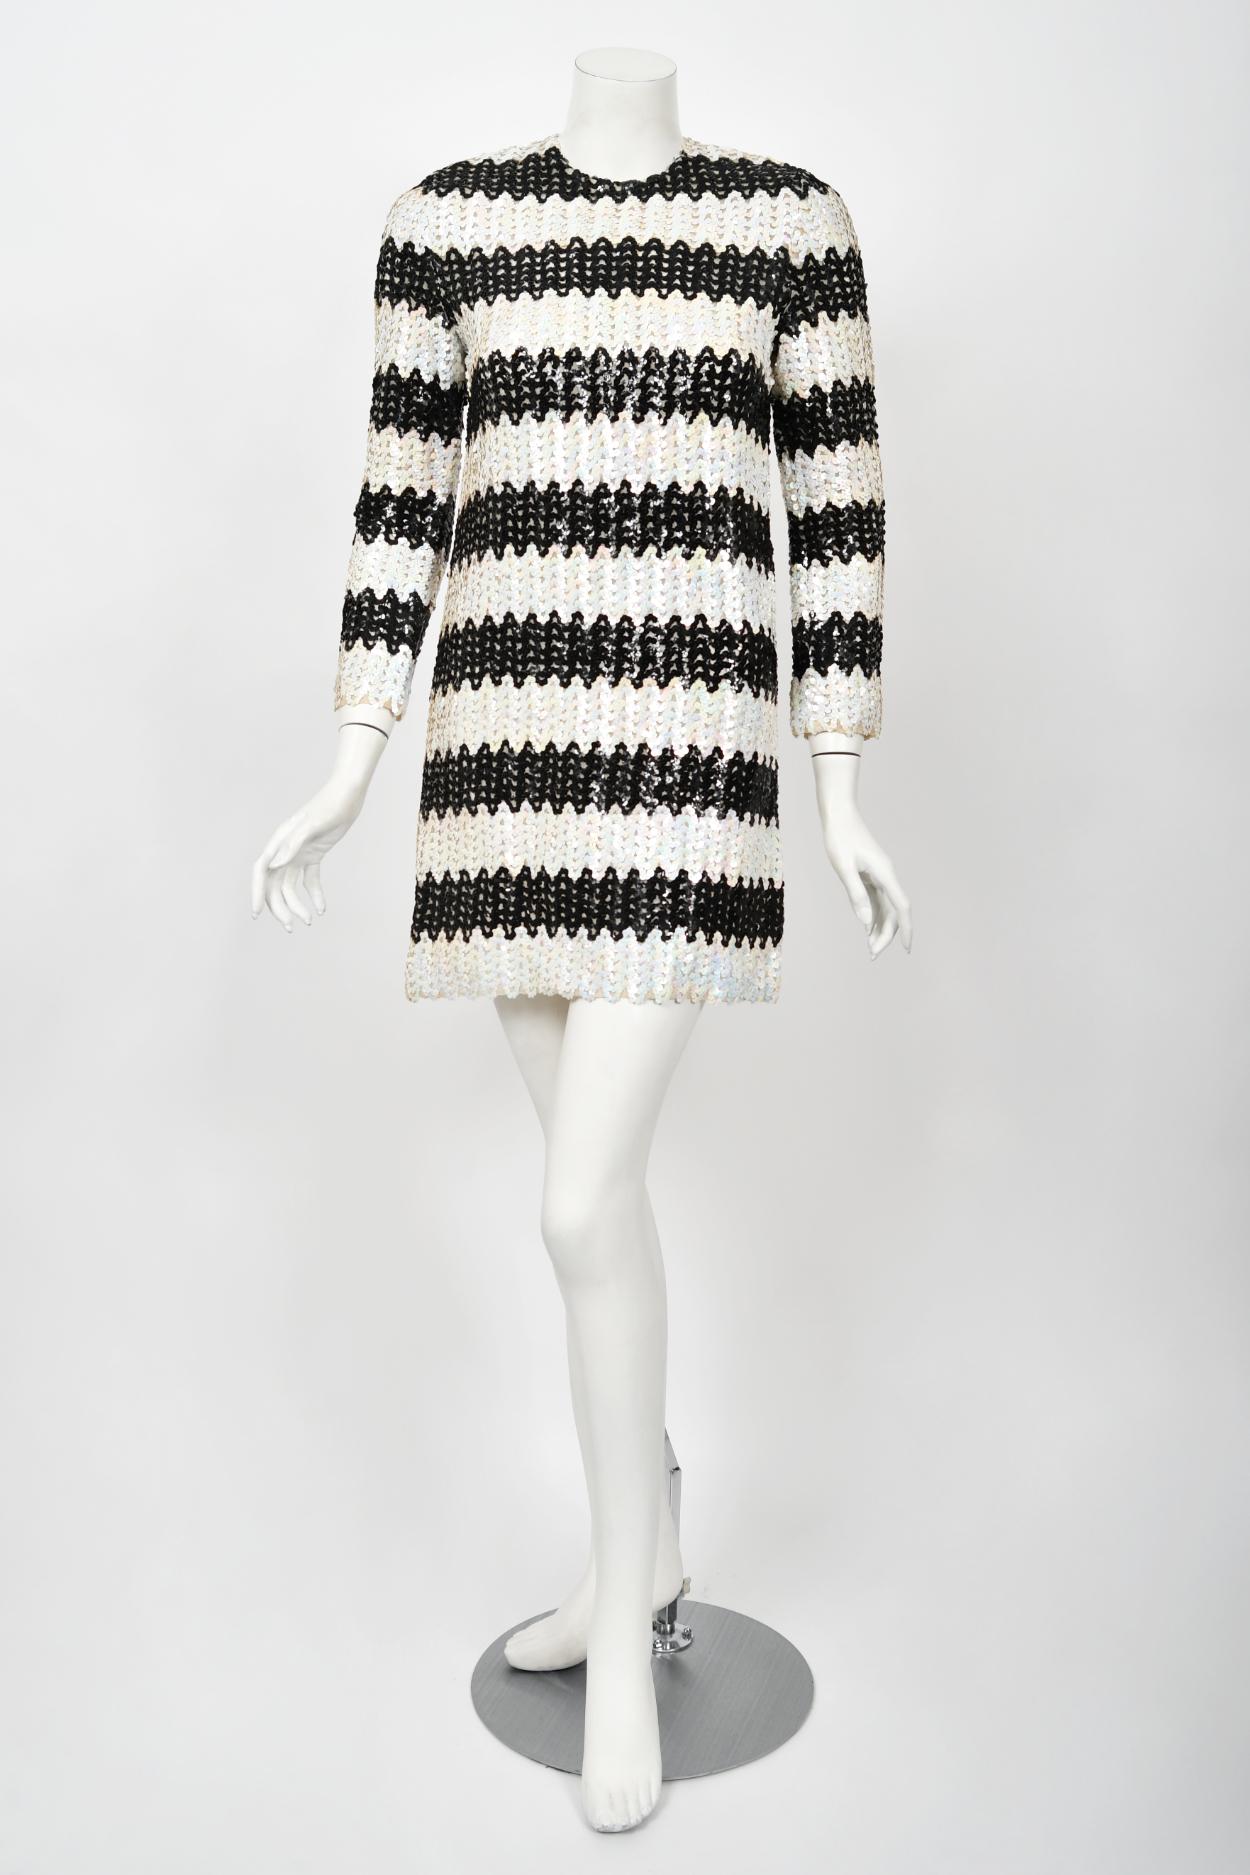 Vintage 1966 Betsey Johnson for Paraphernalia Documented Sequin Mod Mini Dress For Sale 10